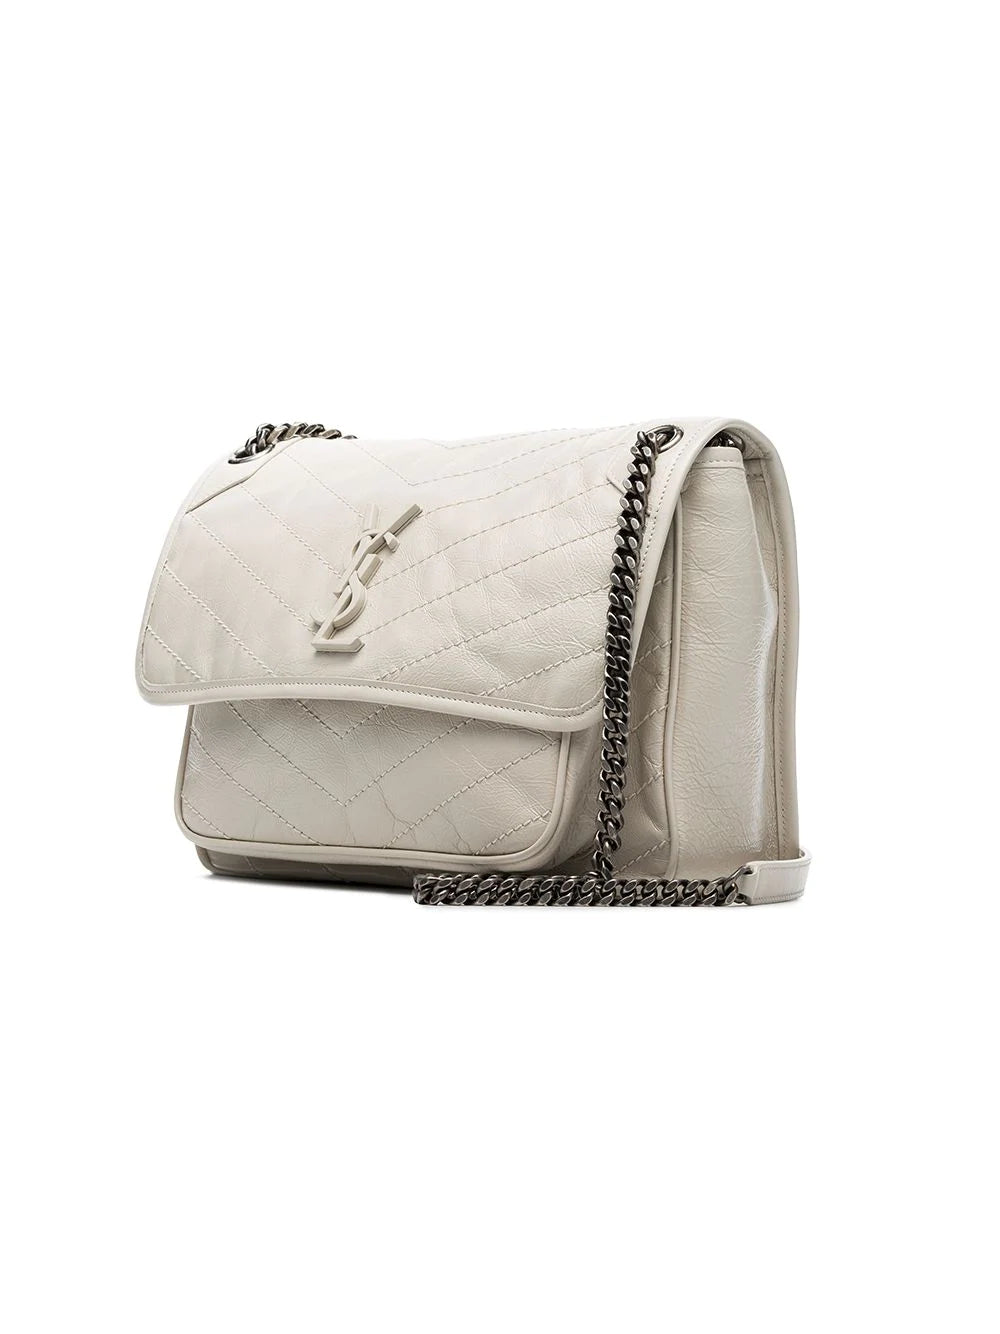 Niki Medium Leather Shoulder Bag in White - Saint Laurent